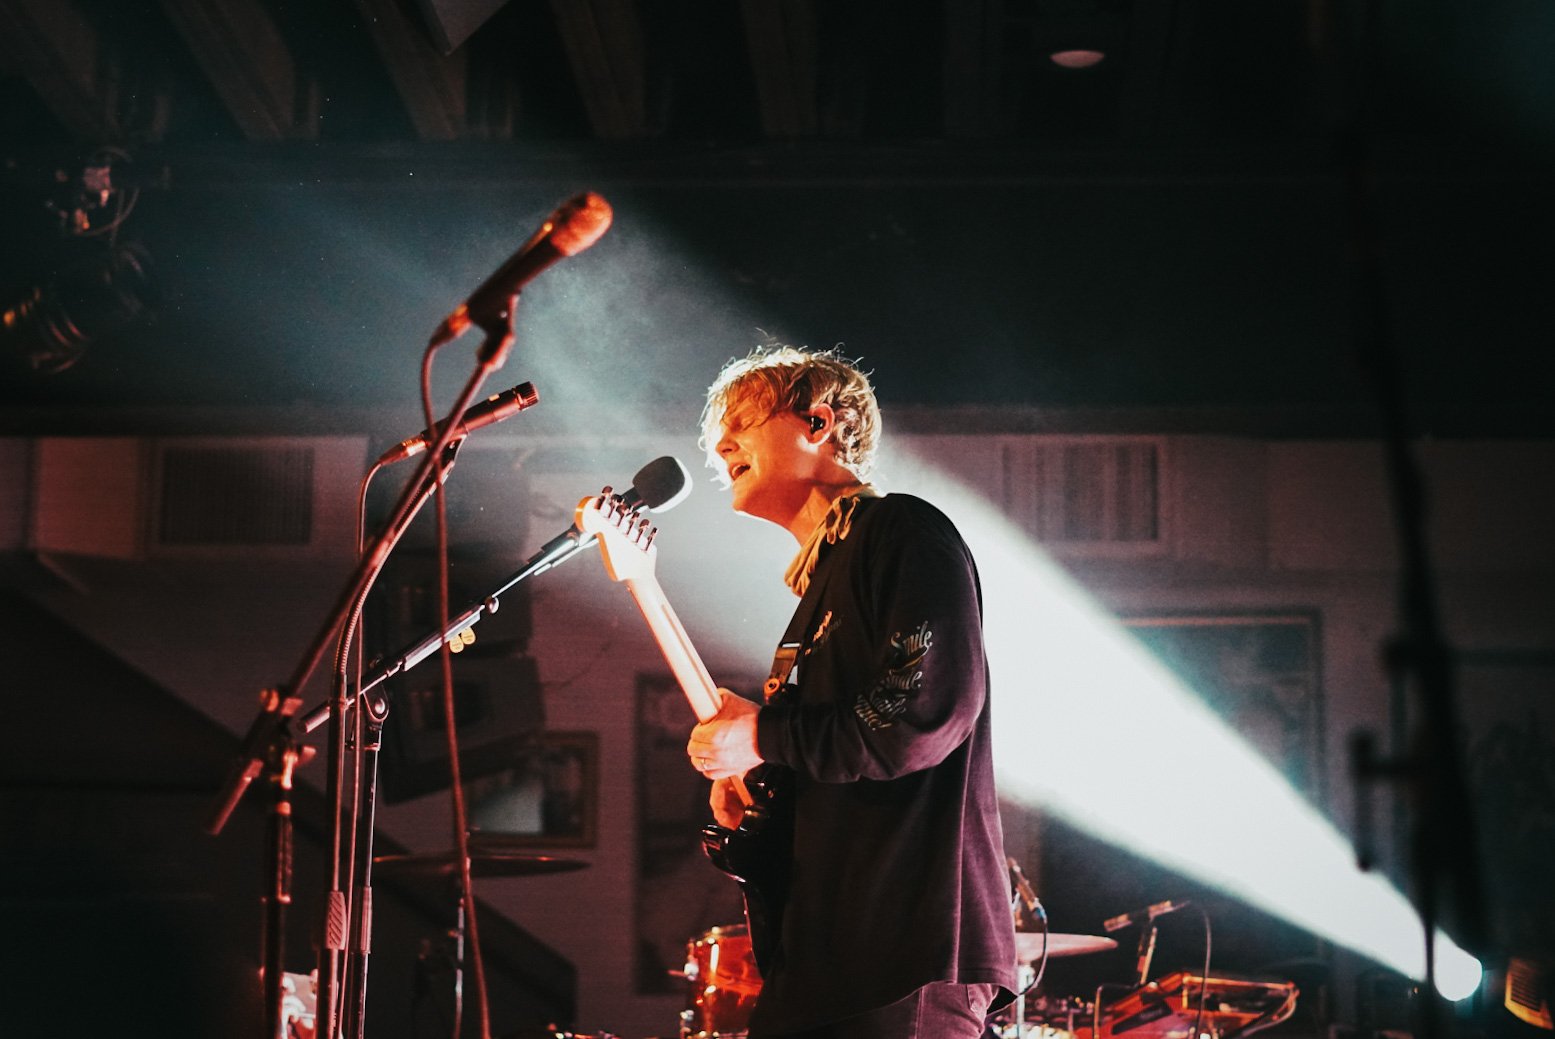  Frontman of Colony House, Caleb Chapman, performs at Antone’s Nightclub. 